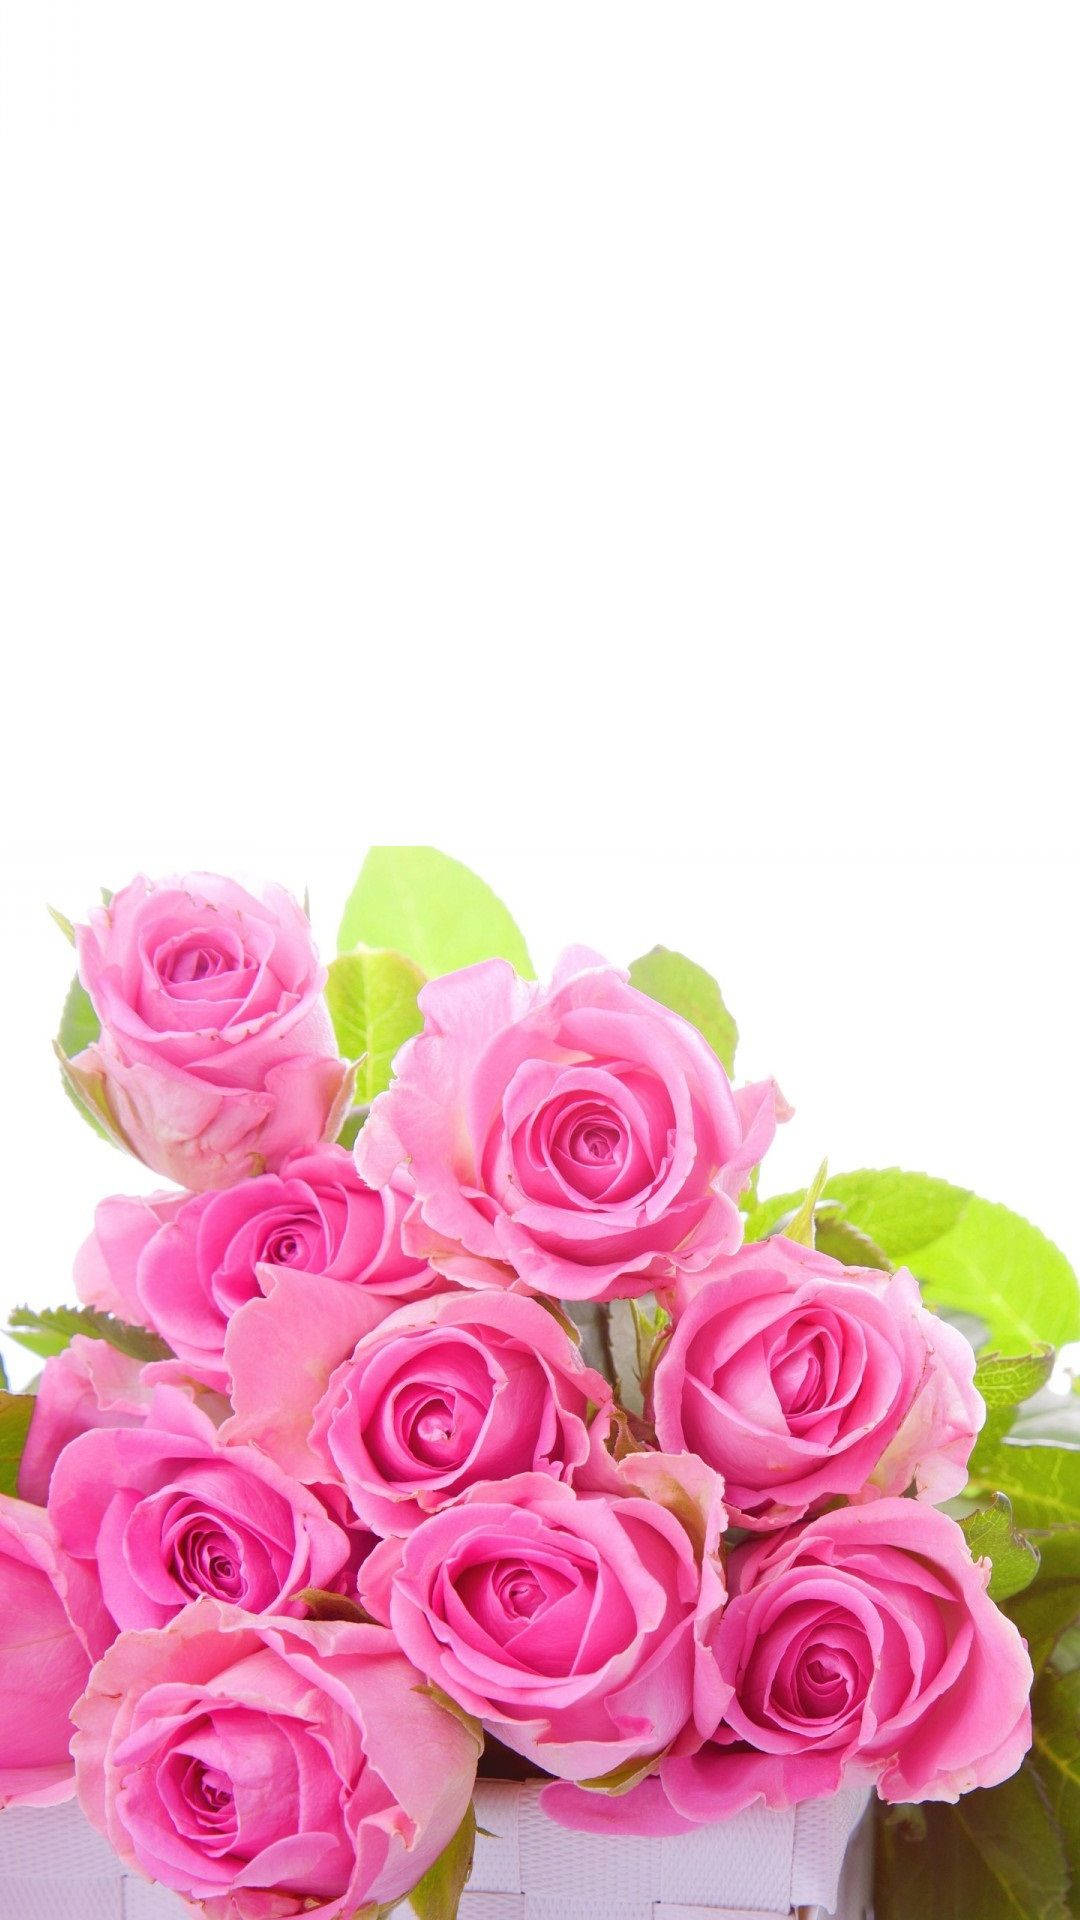 1080x1920 Download Pink Roses Flower Bouquet Wallpaper